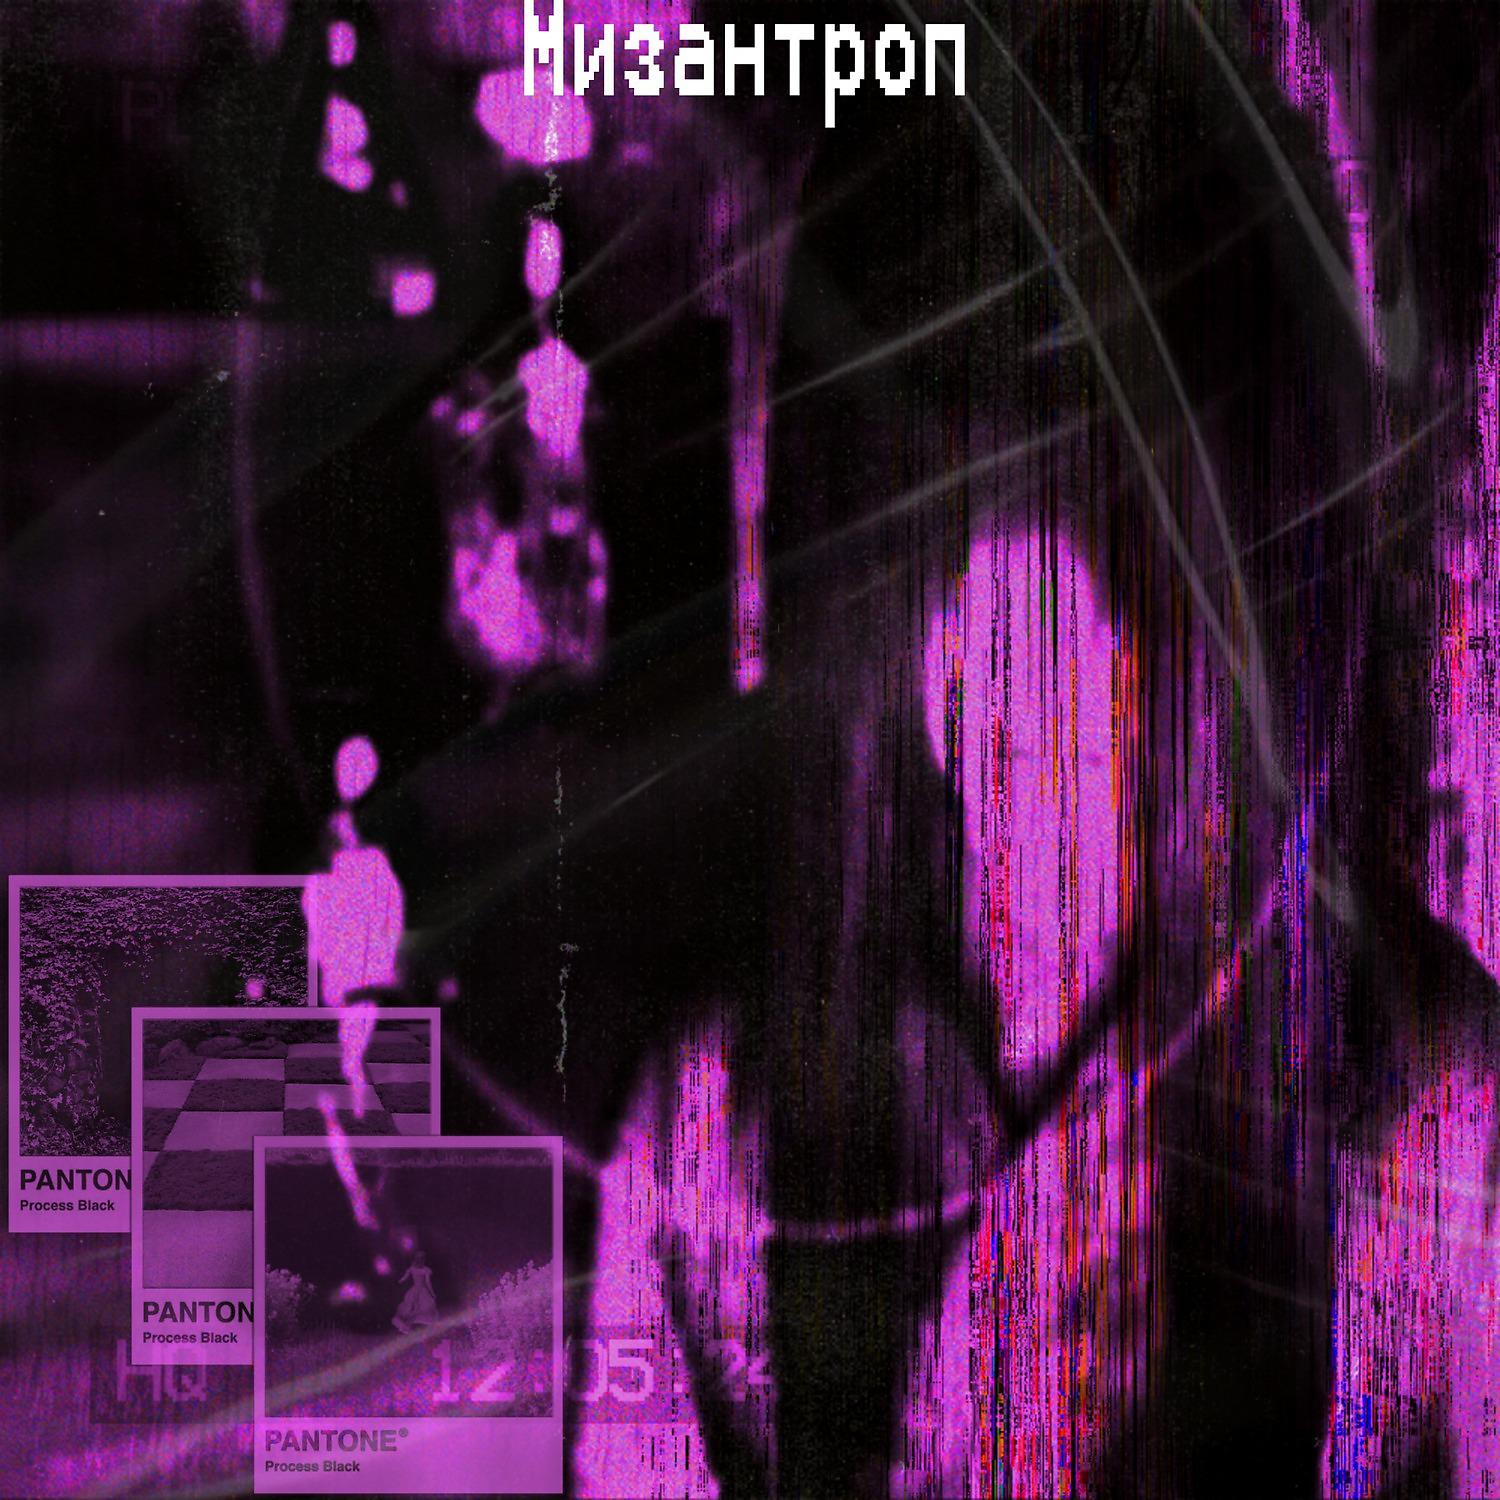 Постер альбома Мизантроп